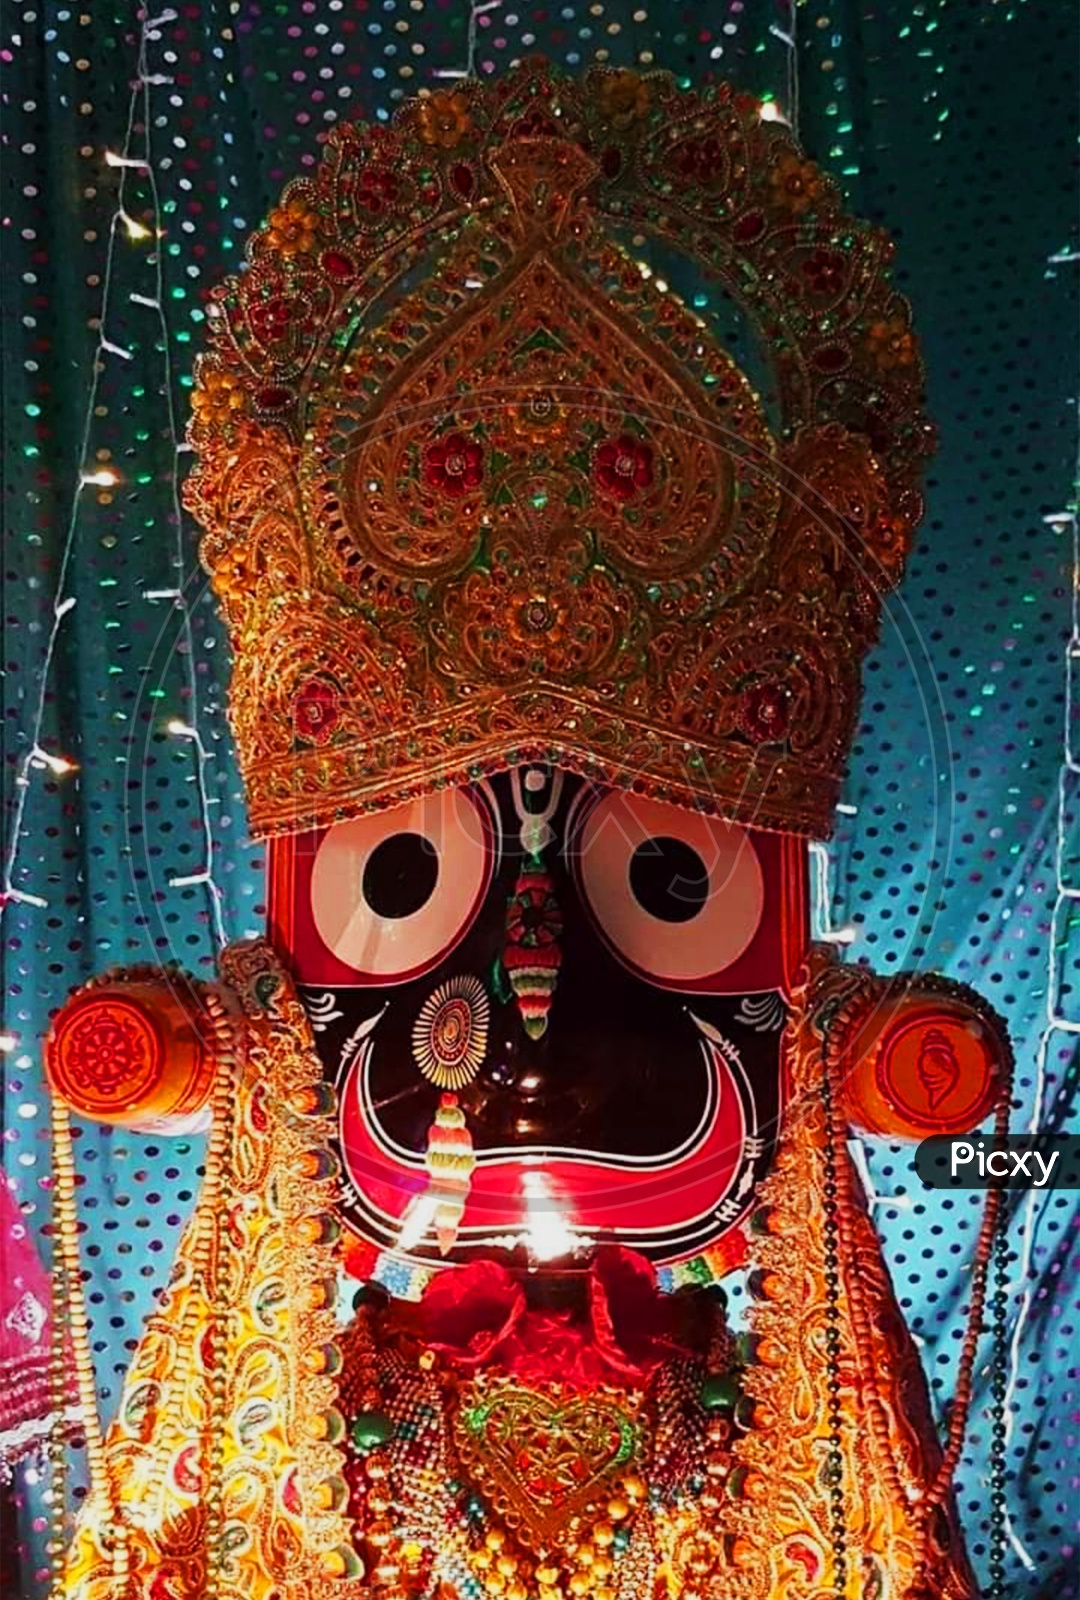 Image of Idol Of Lord Jagannath, Holy Hindu God-BK509760-Picxy